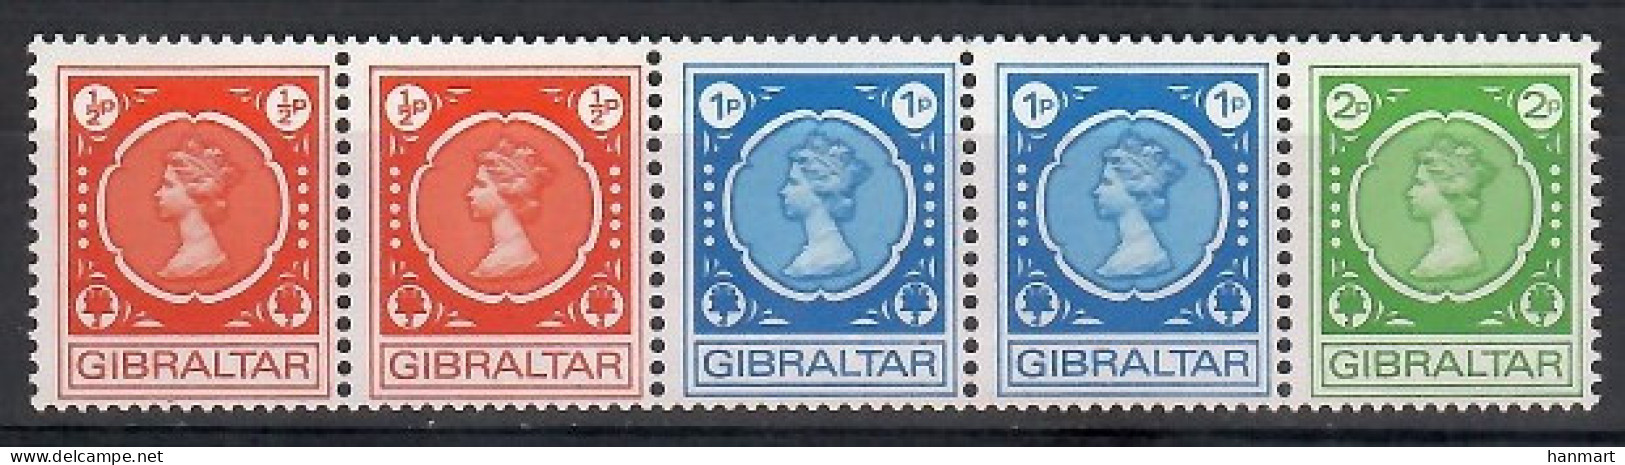 Gibraltar 1971 Mi 276-278 MNH  (ZE1 GIBfun276-278) - Koniklijke Families